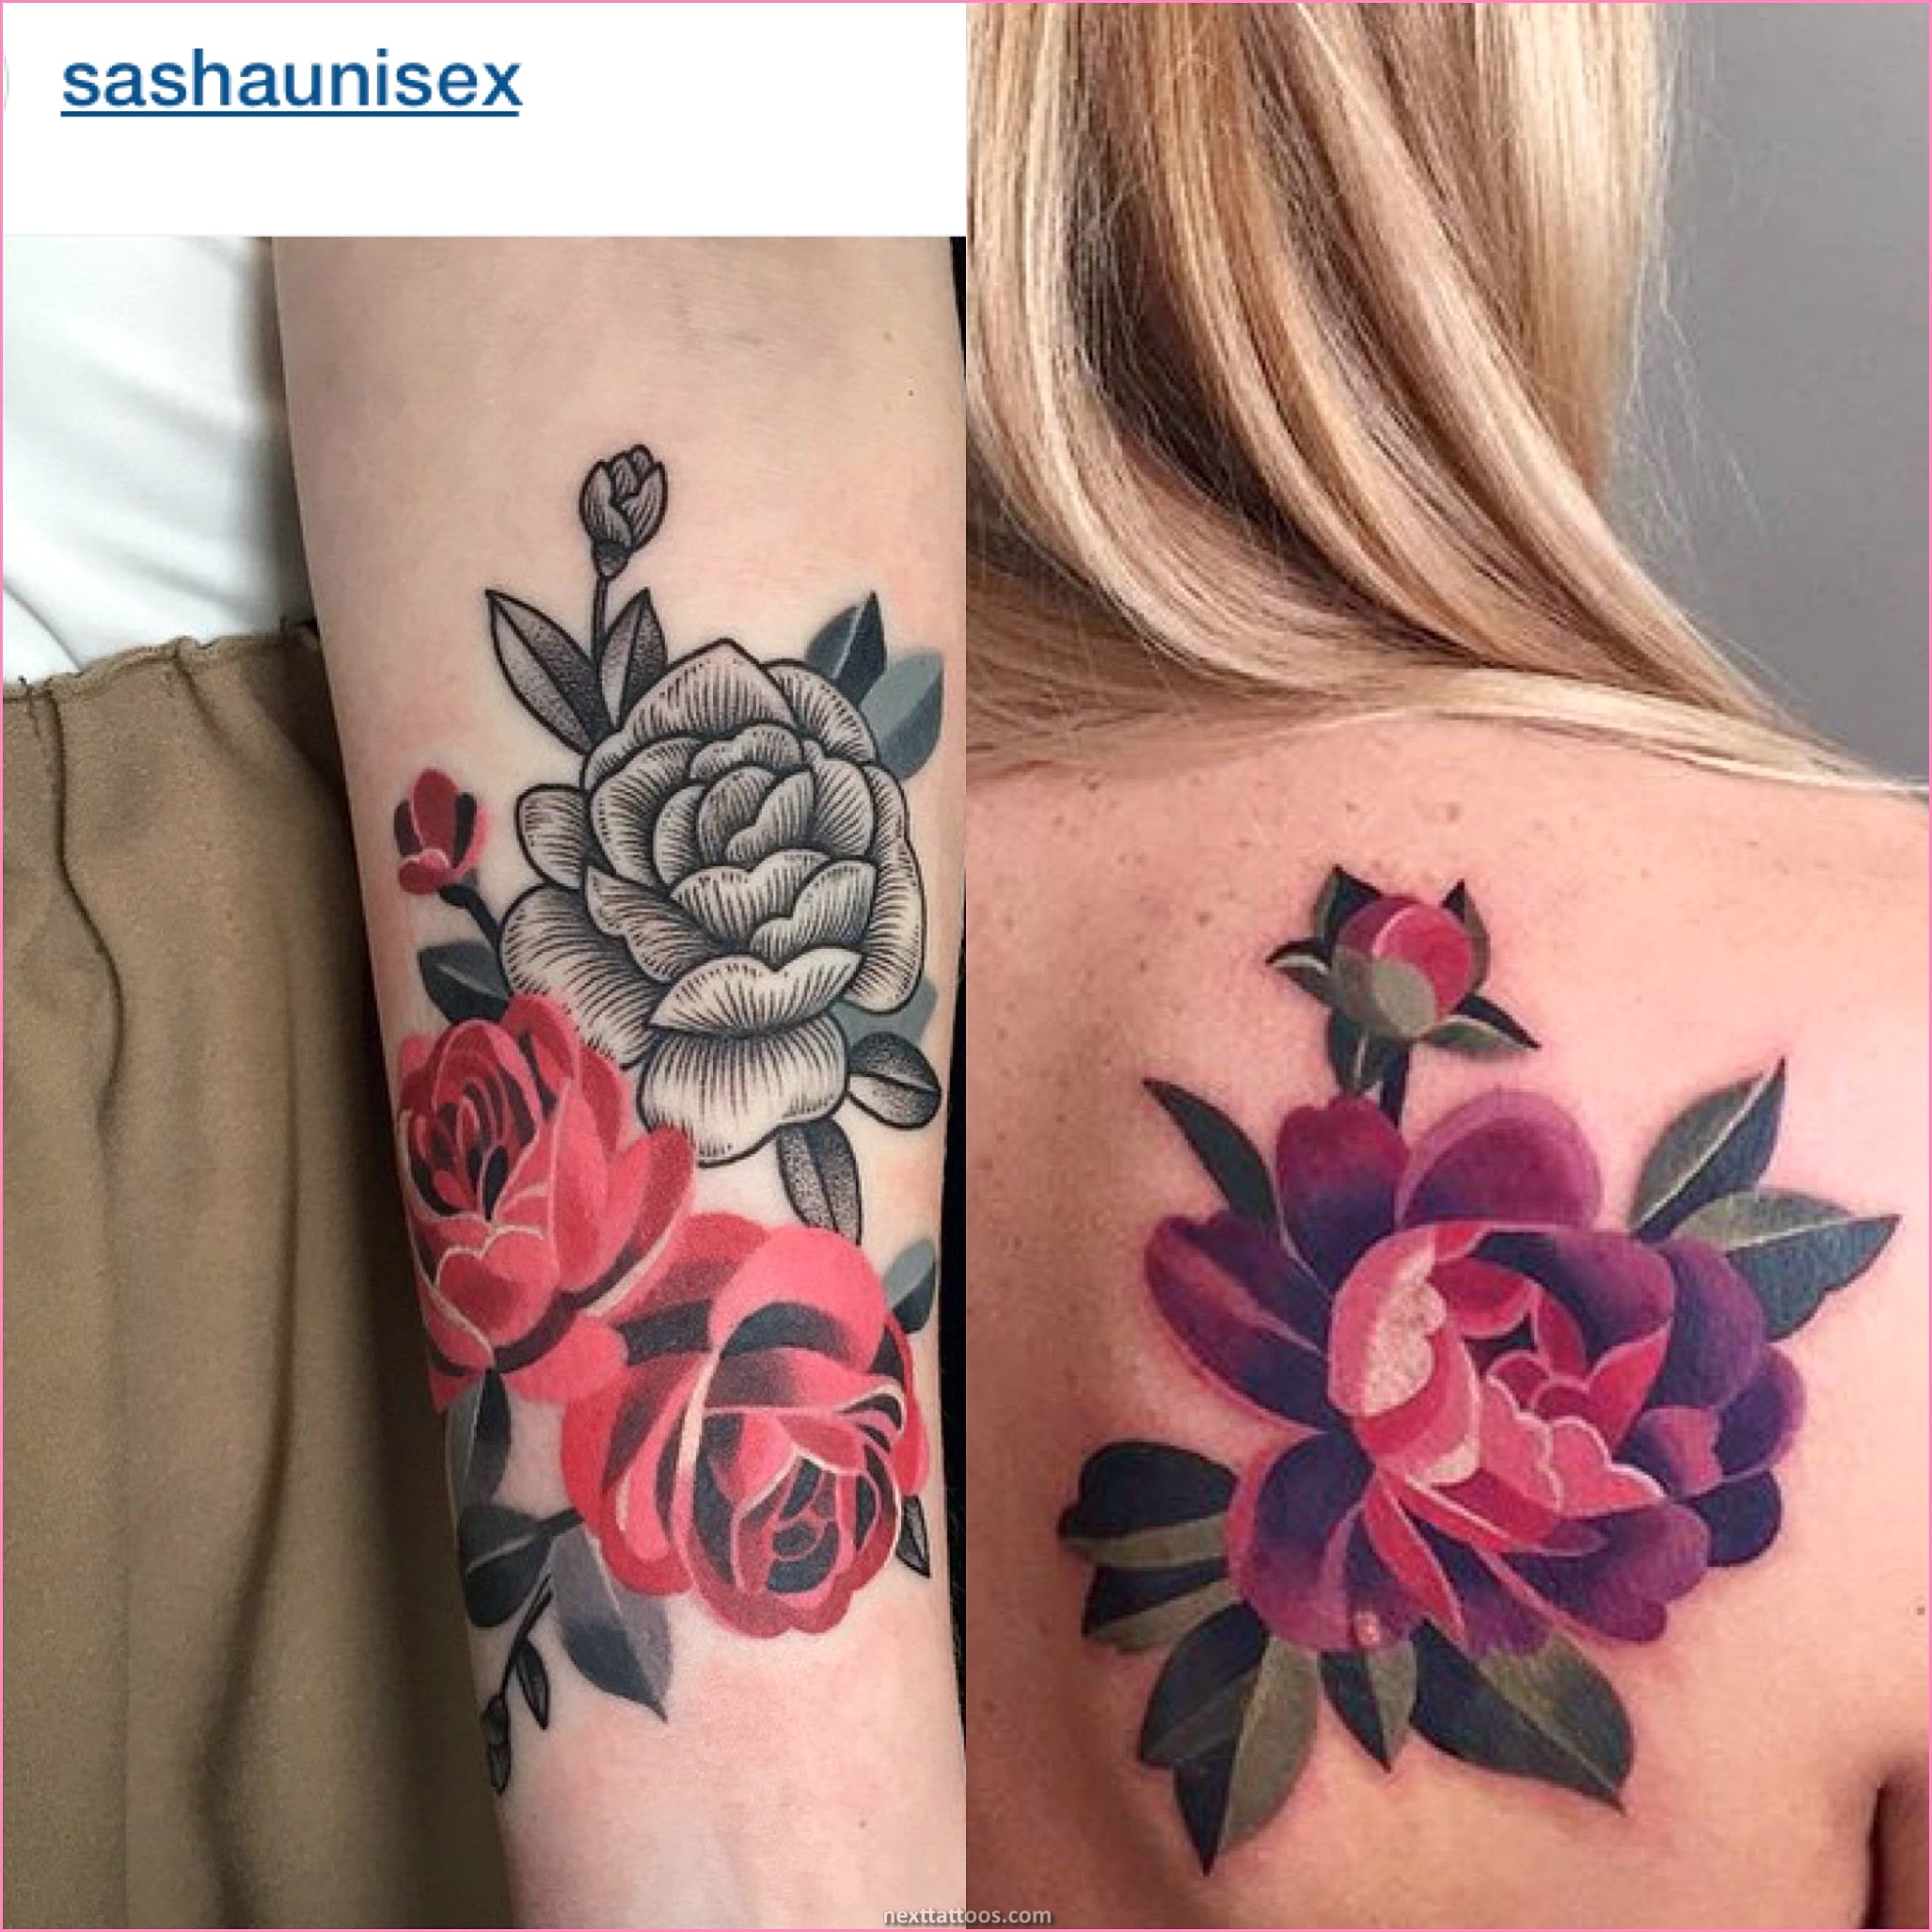 Sasha Unisex Tattoos - Do They Fade?